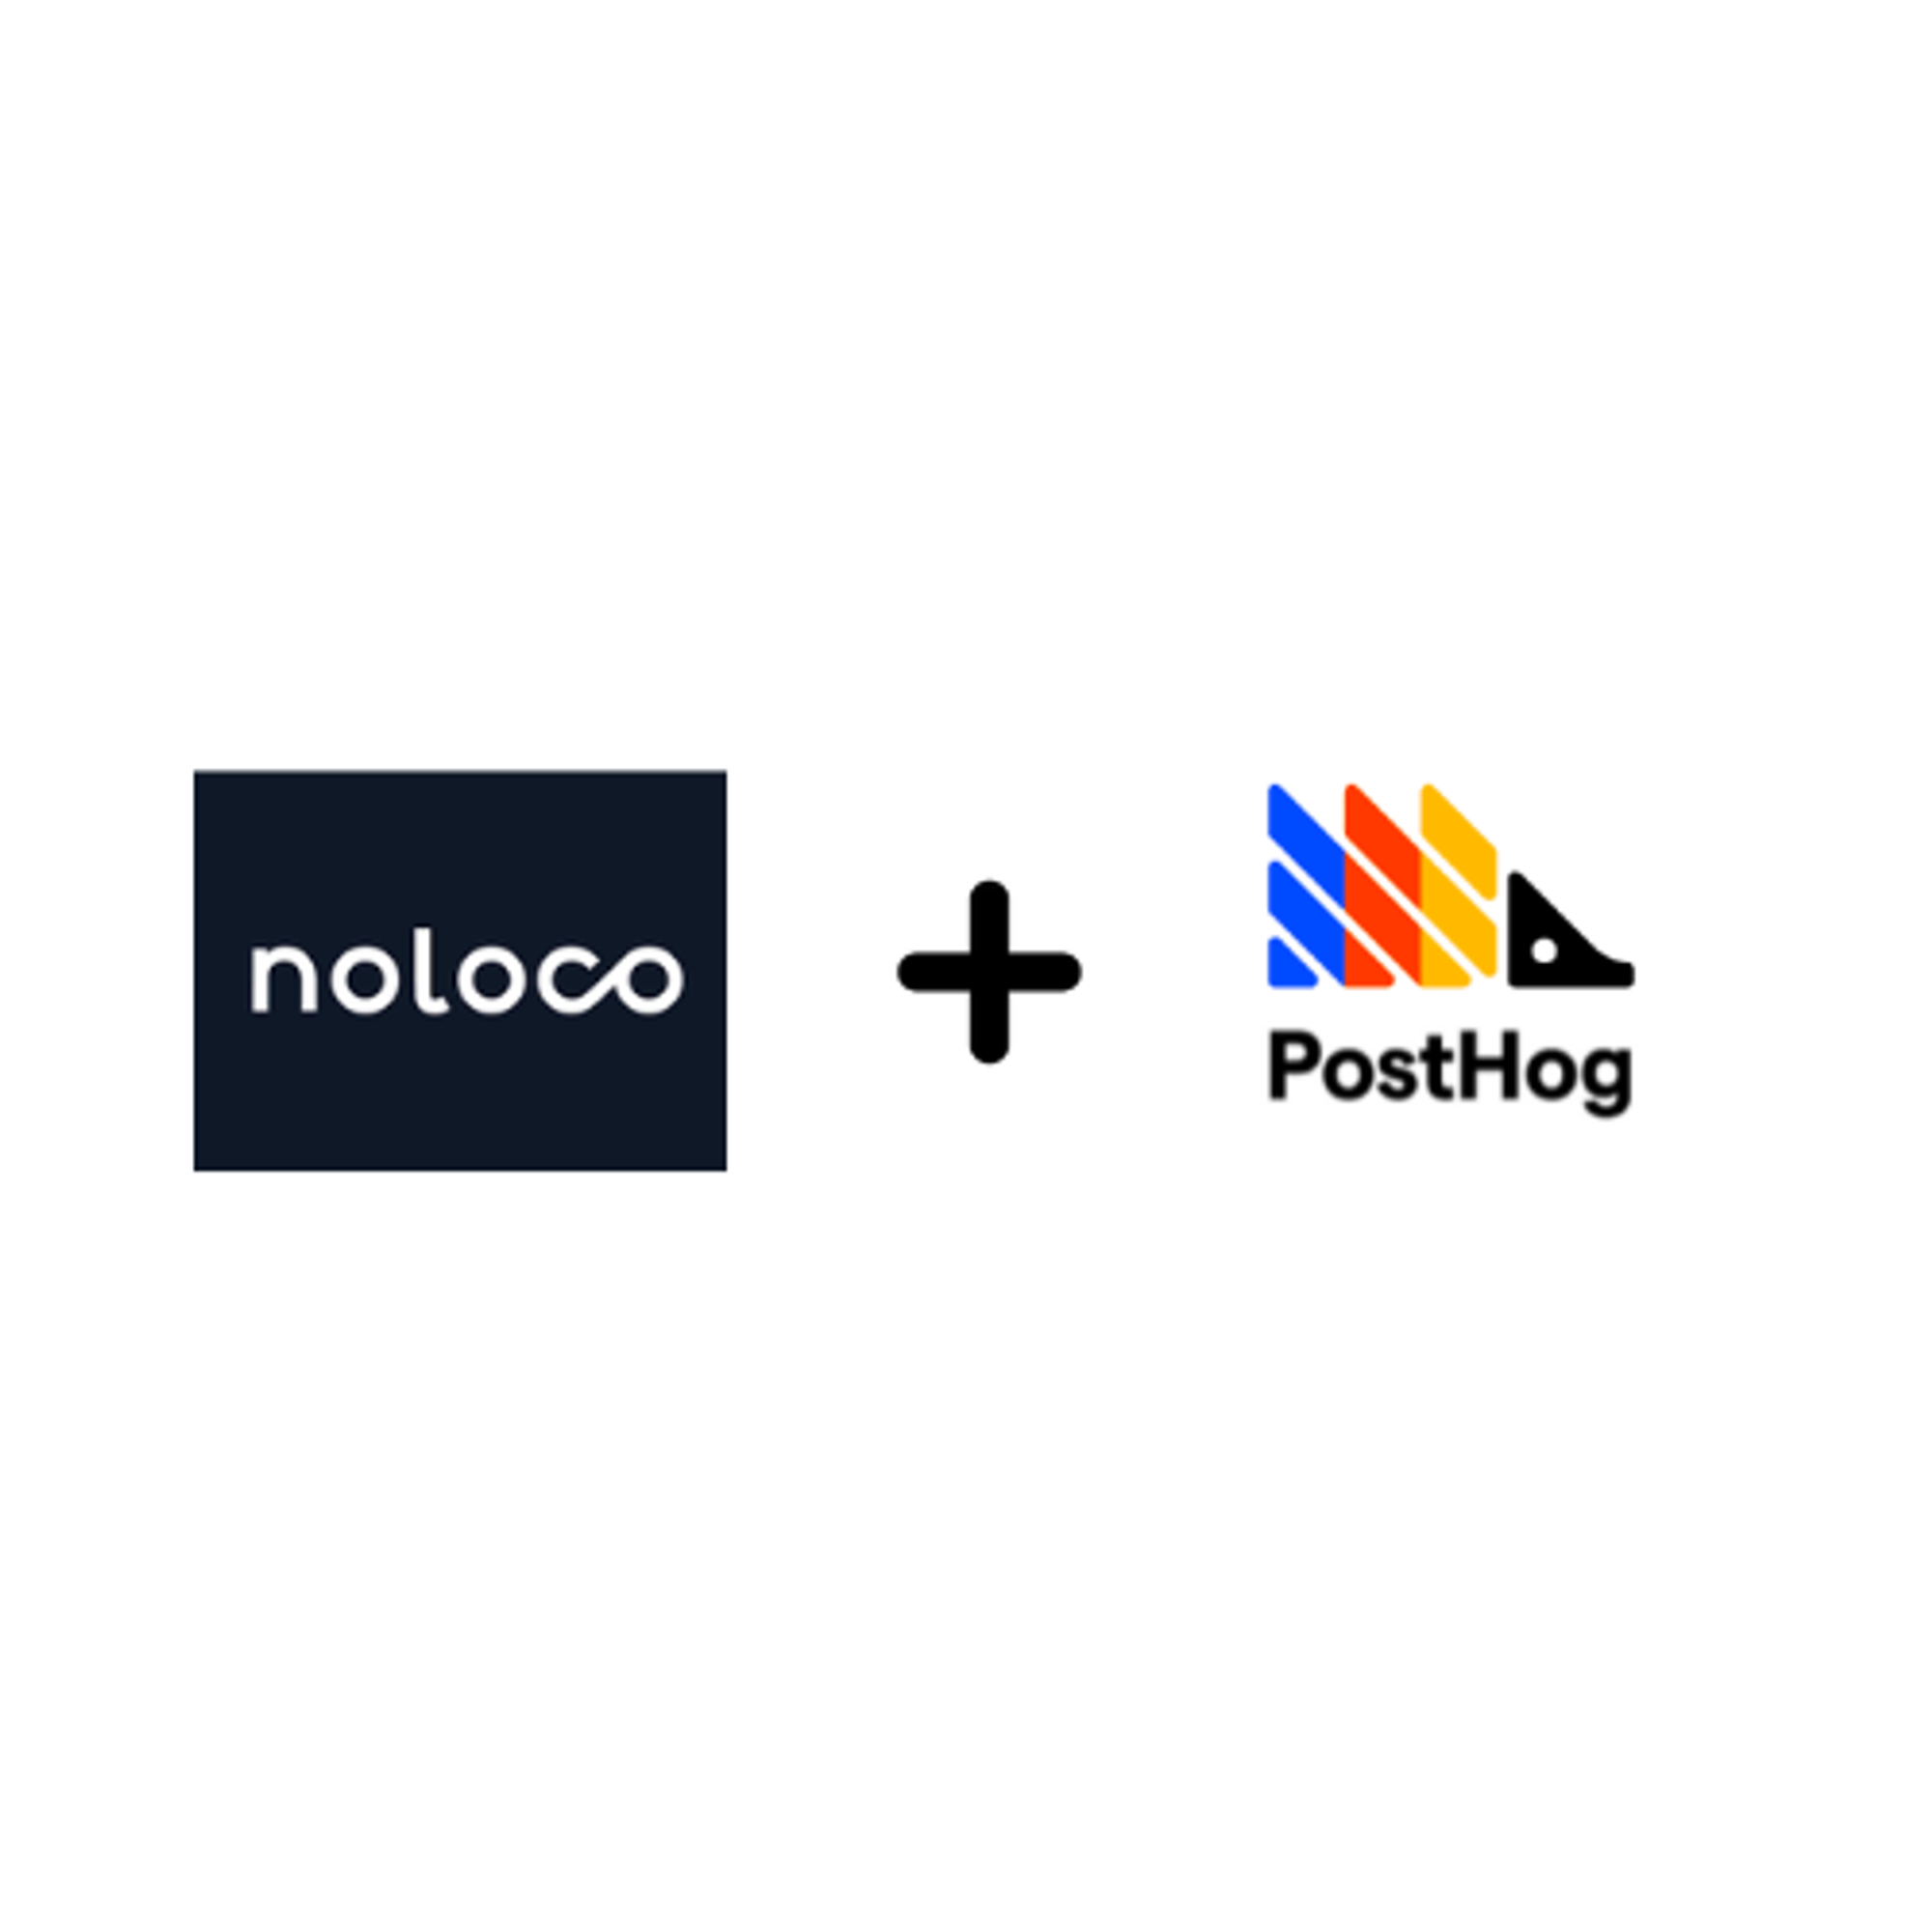 Noloco essentials analytics using PostHog